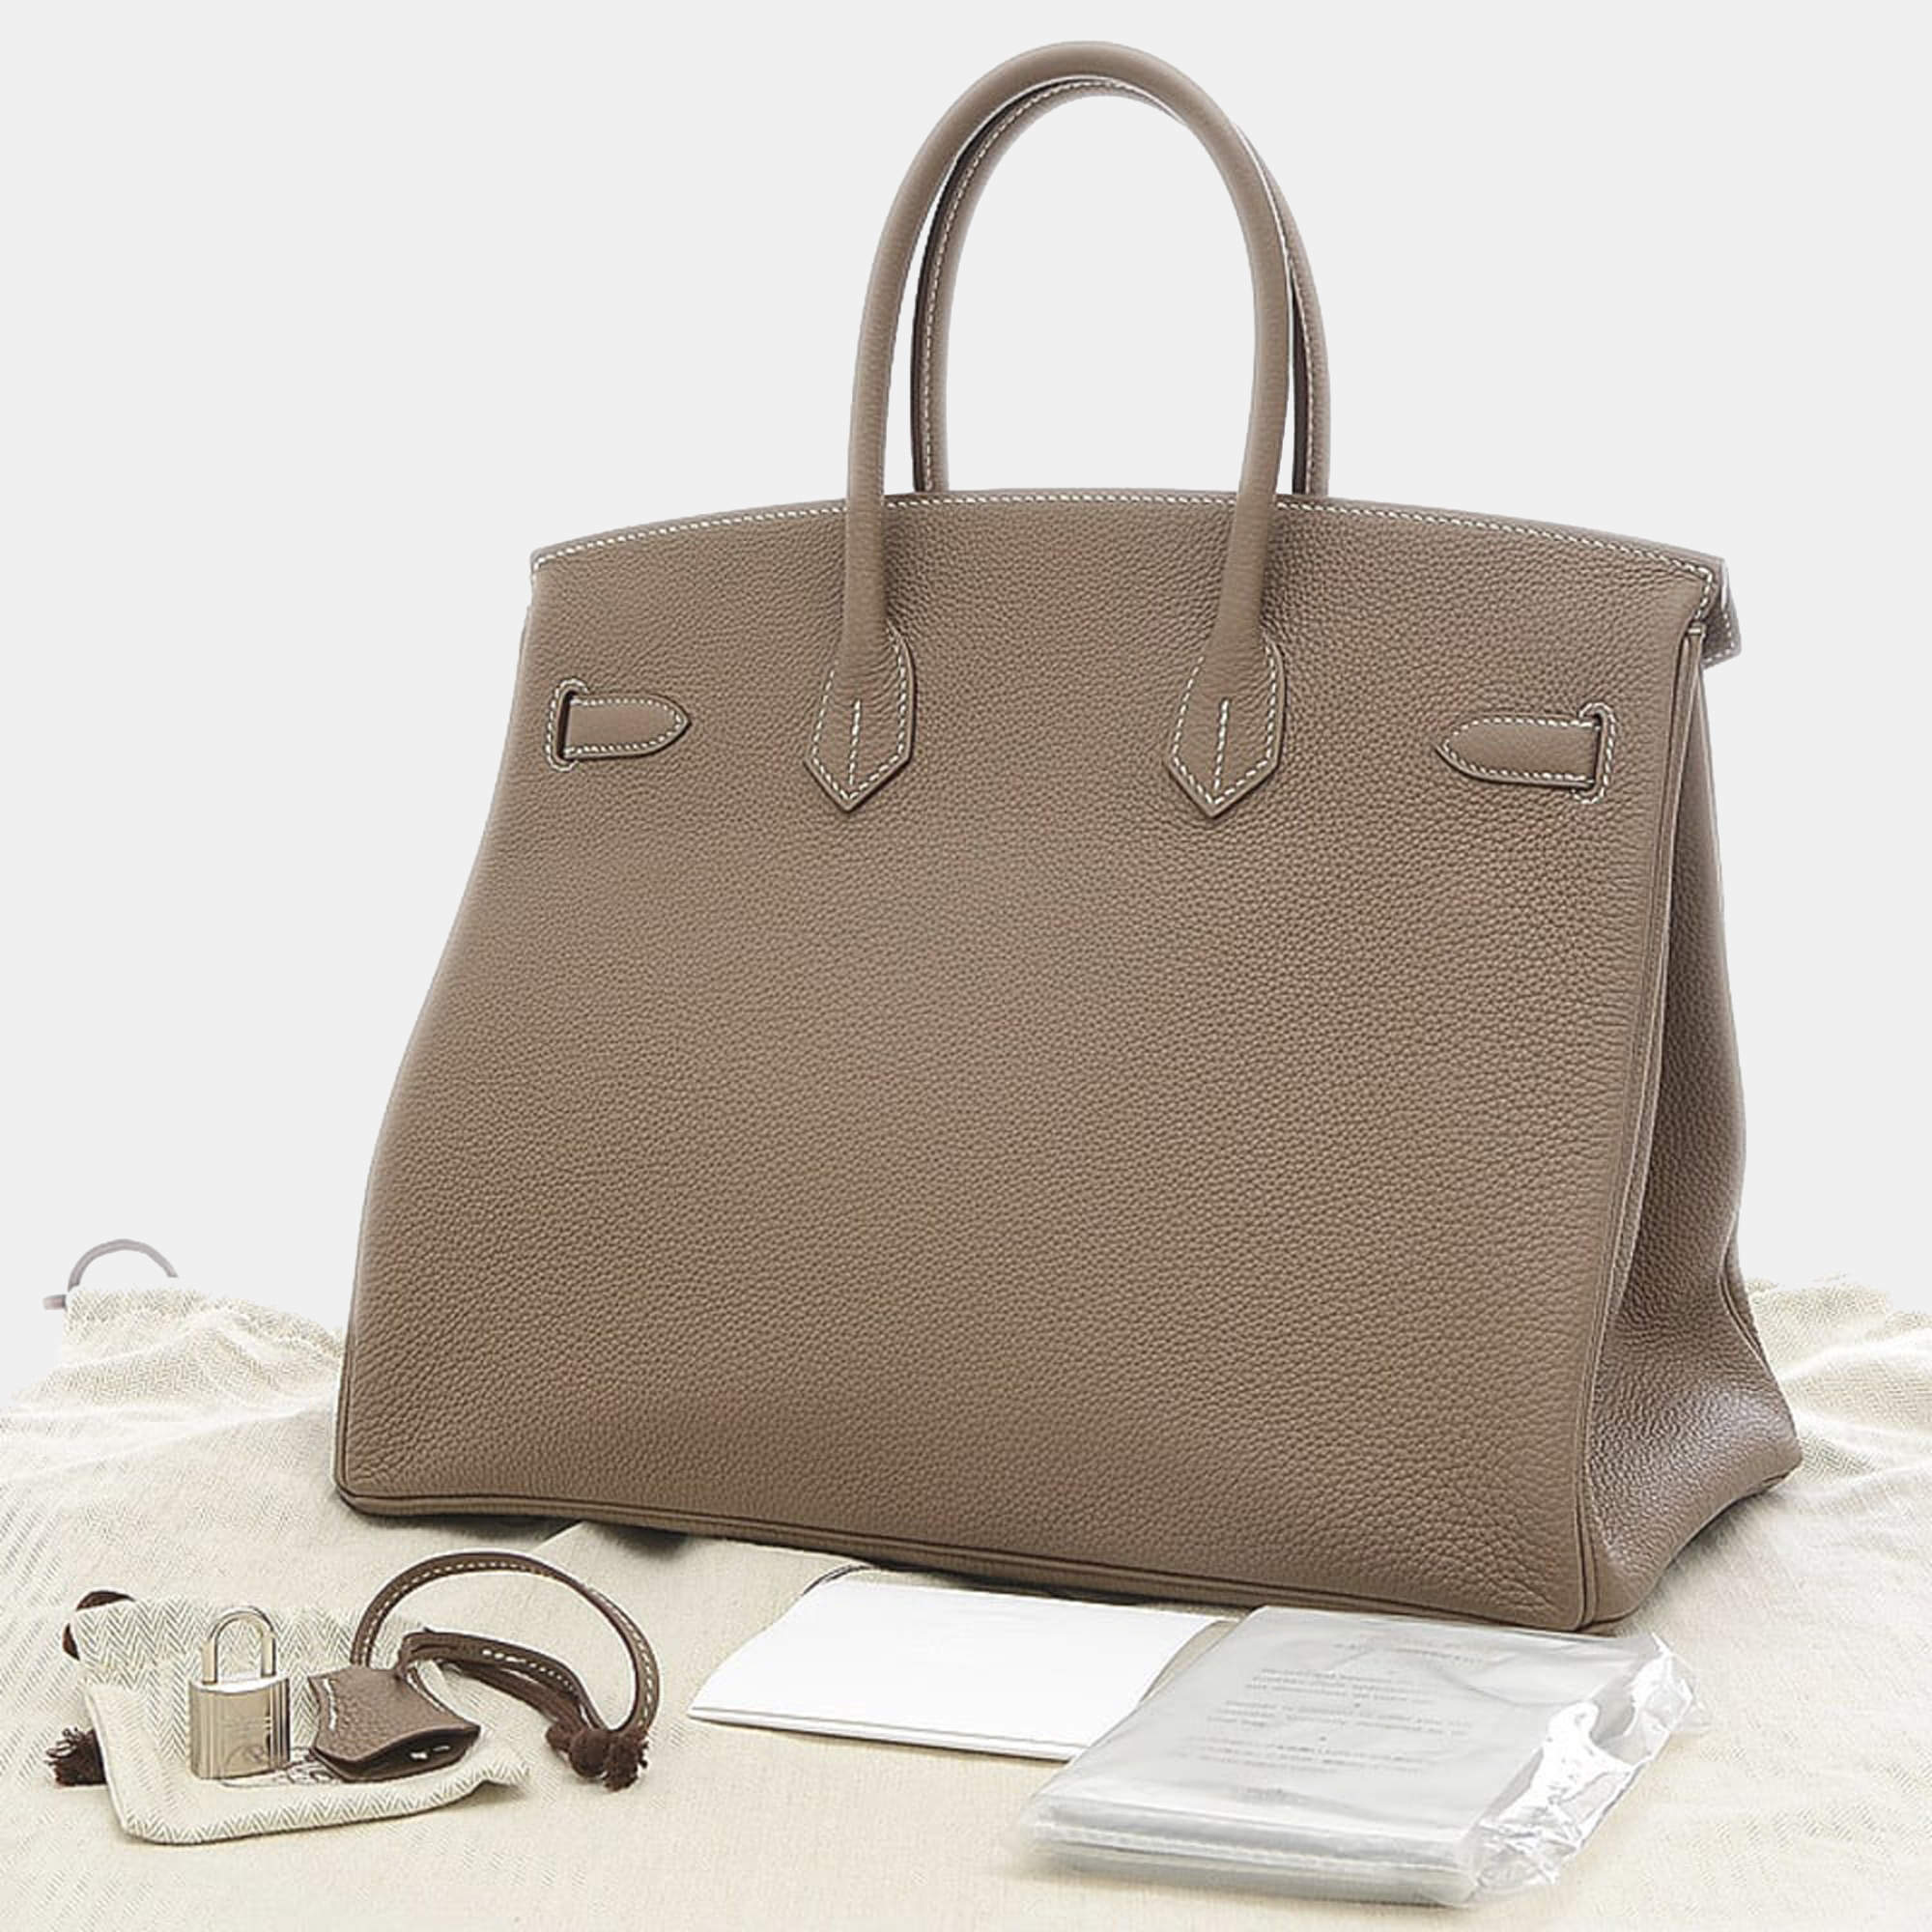 Hermès Birkin Handbag 357786